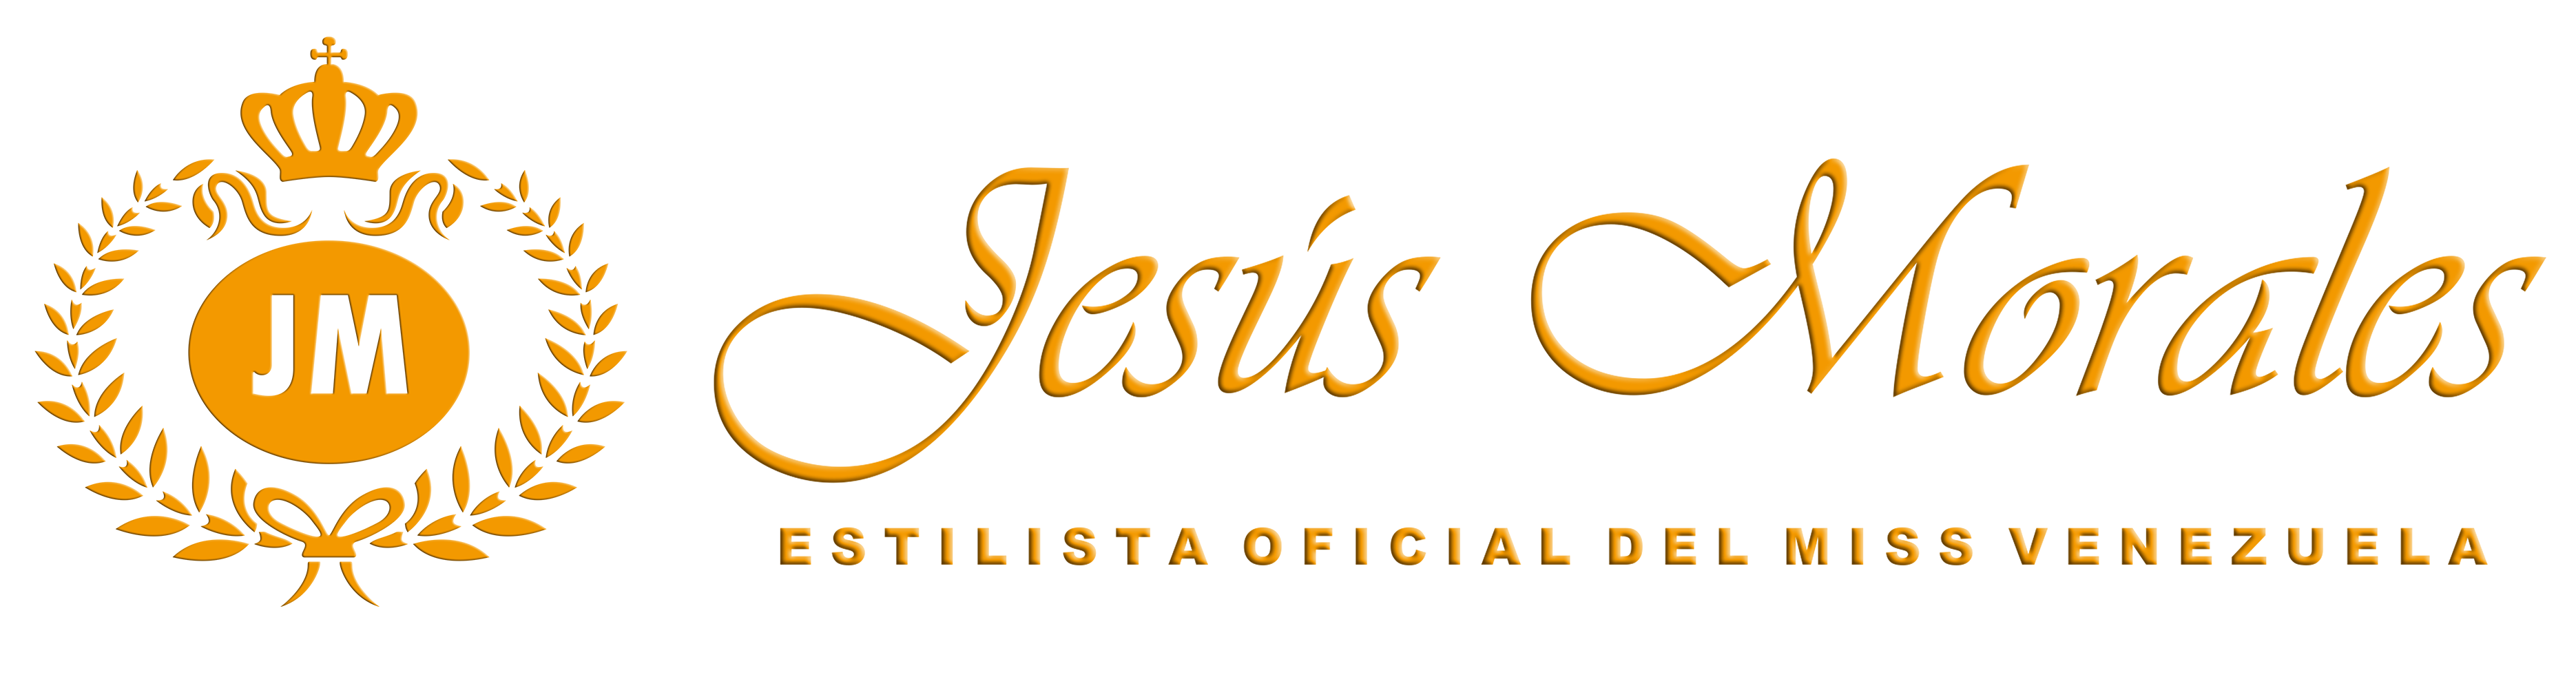 Jesús Morales